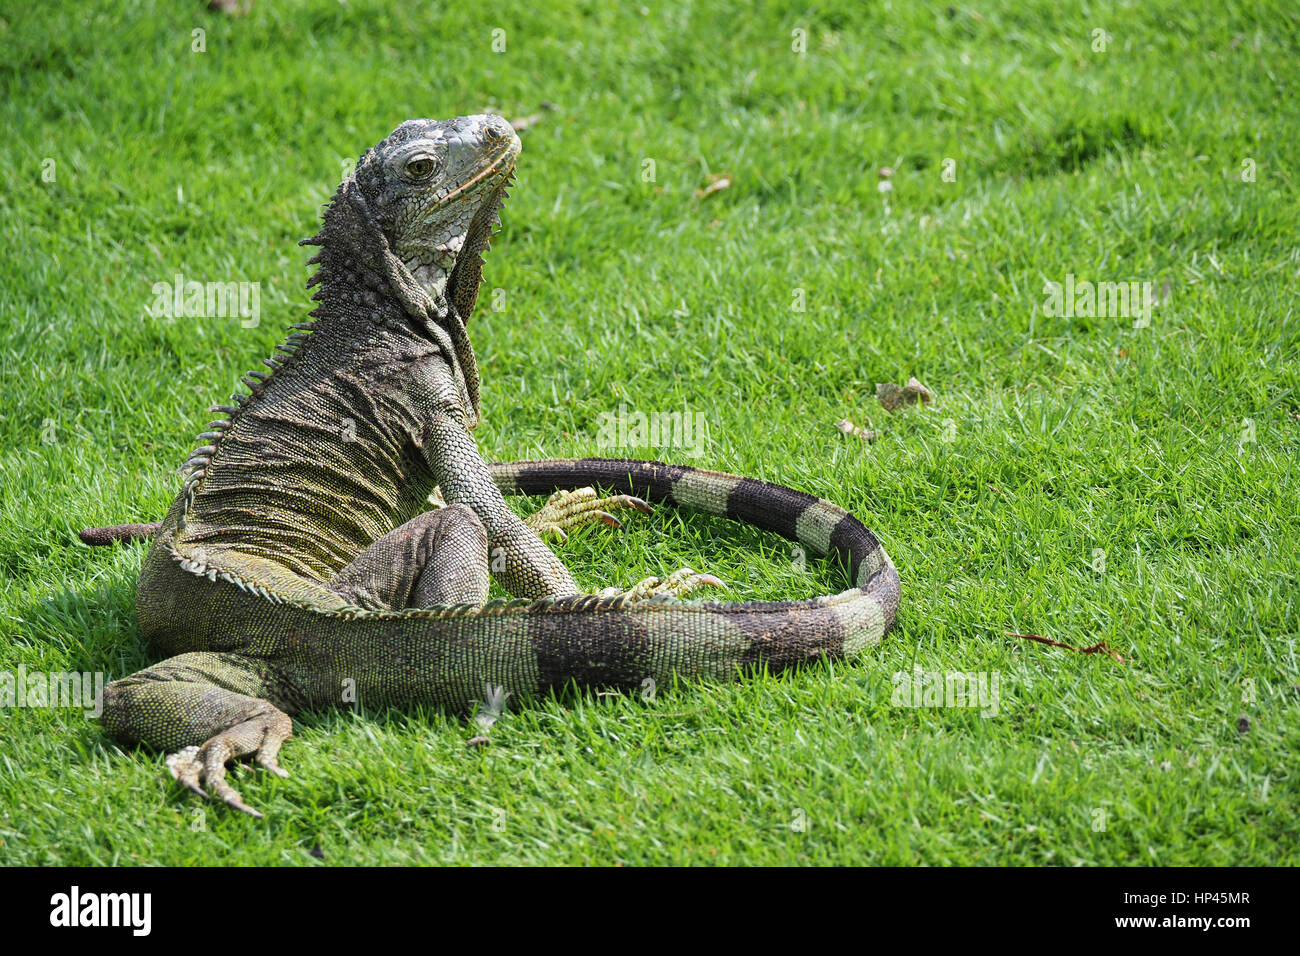 Iguana in Iguana Park, Guayaquil Stock Photo